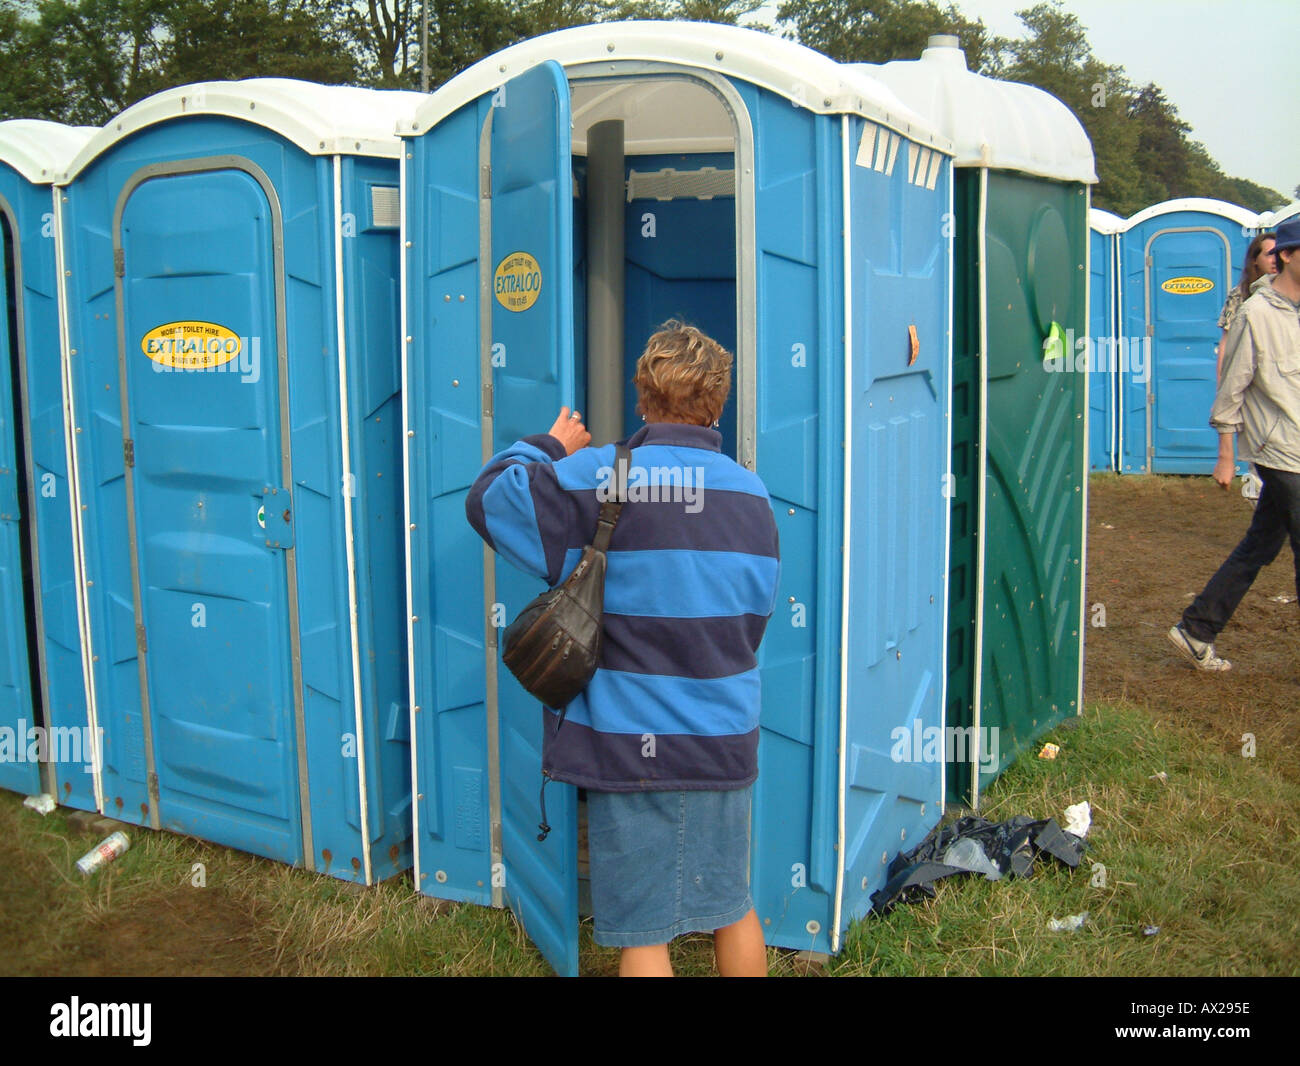 Festival toilets Stock Photo